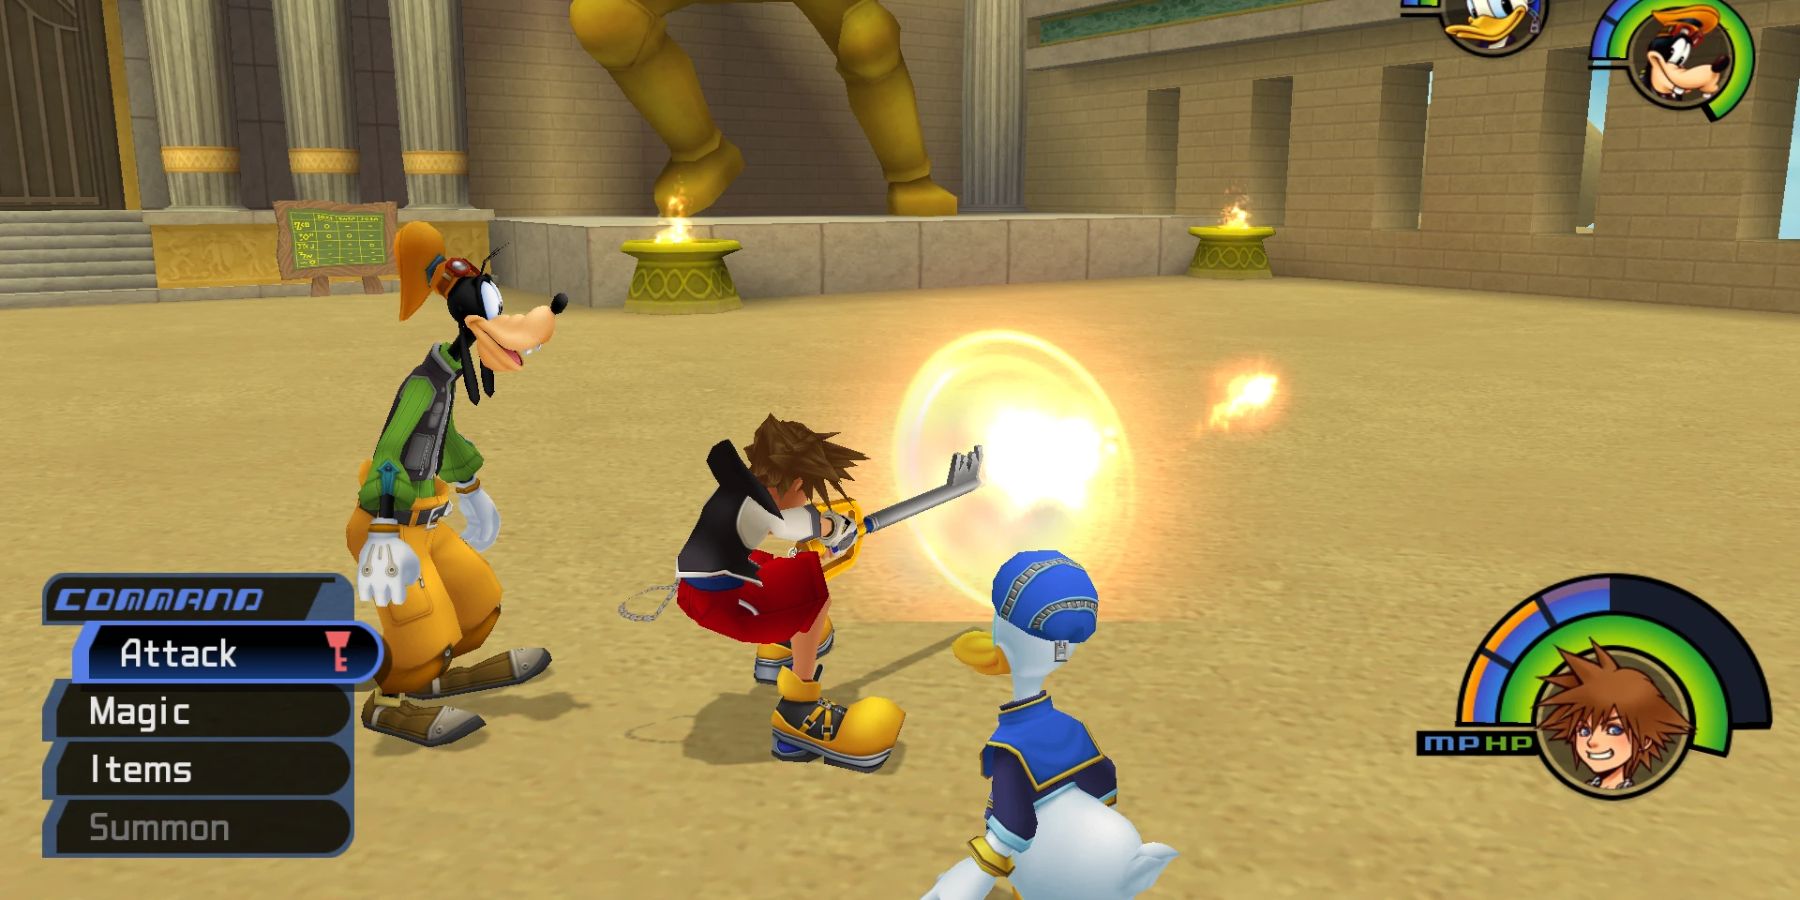 Sora casts Fire in Kingdom Hearts